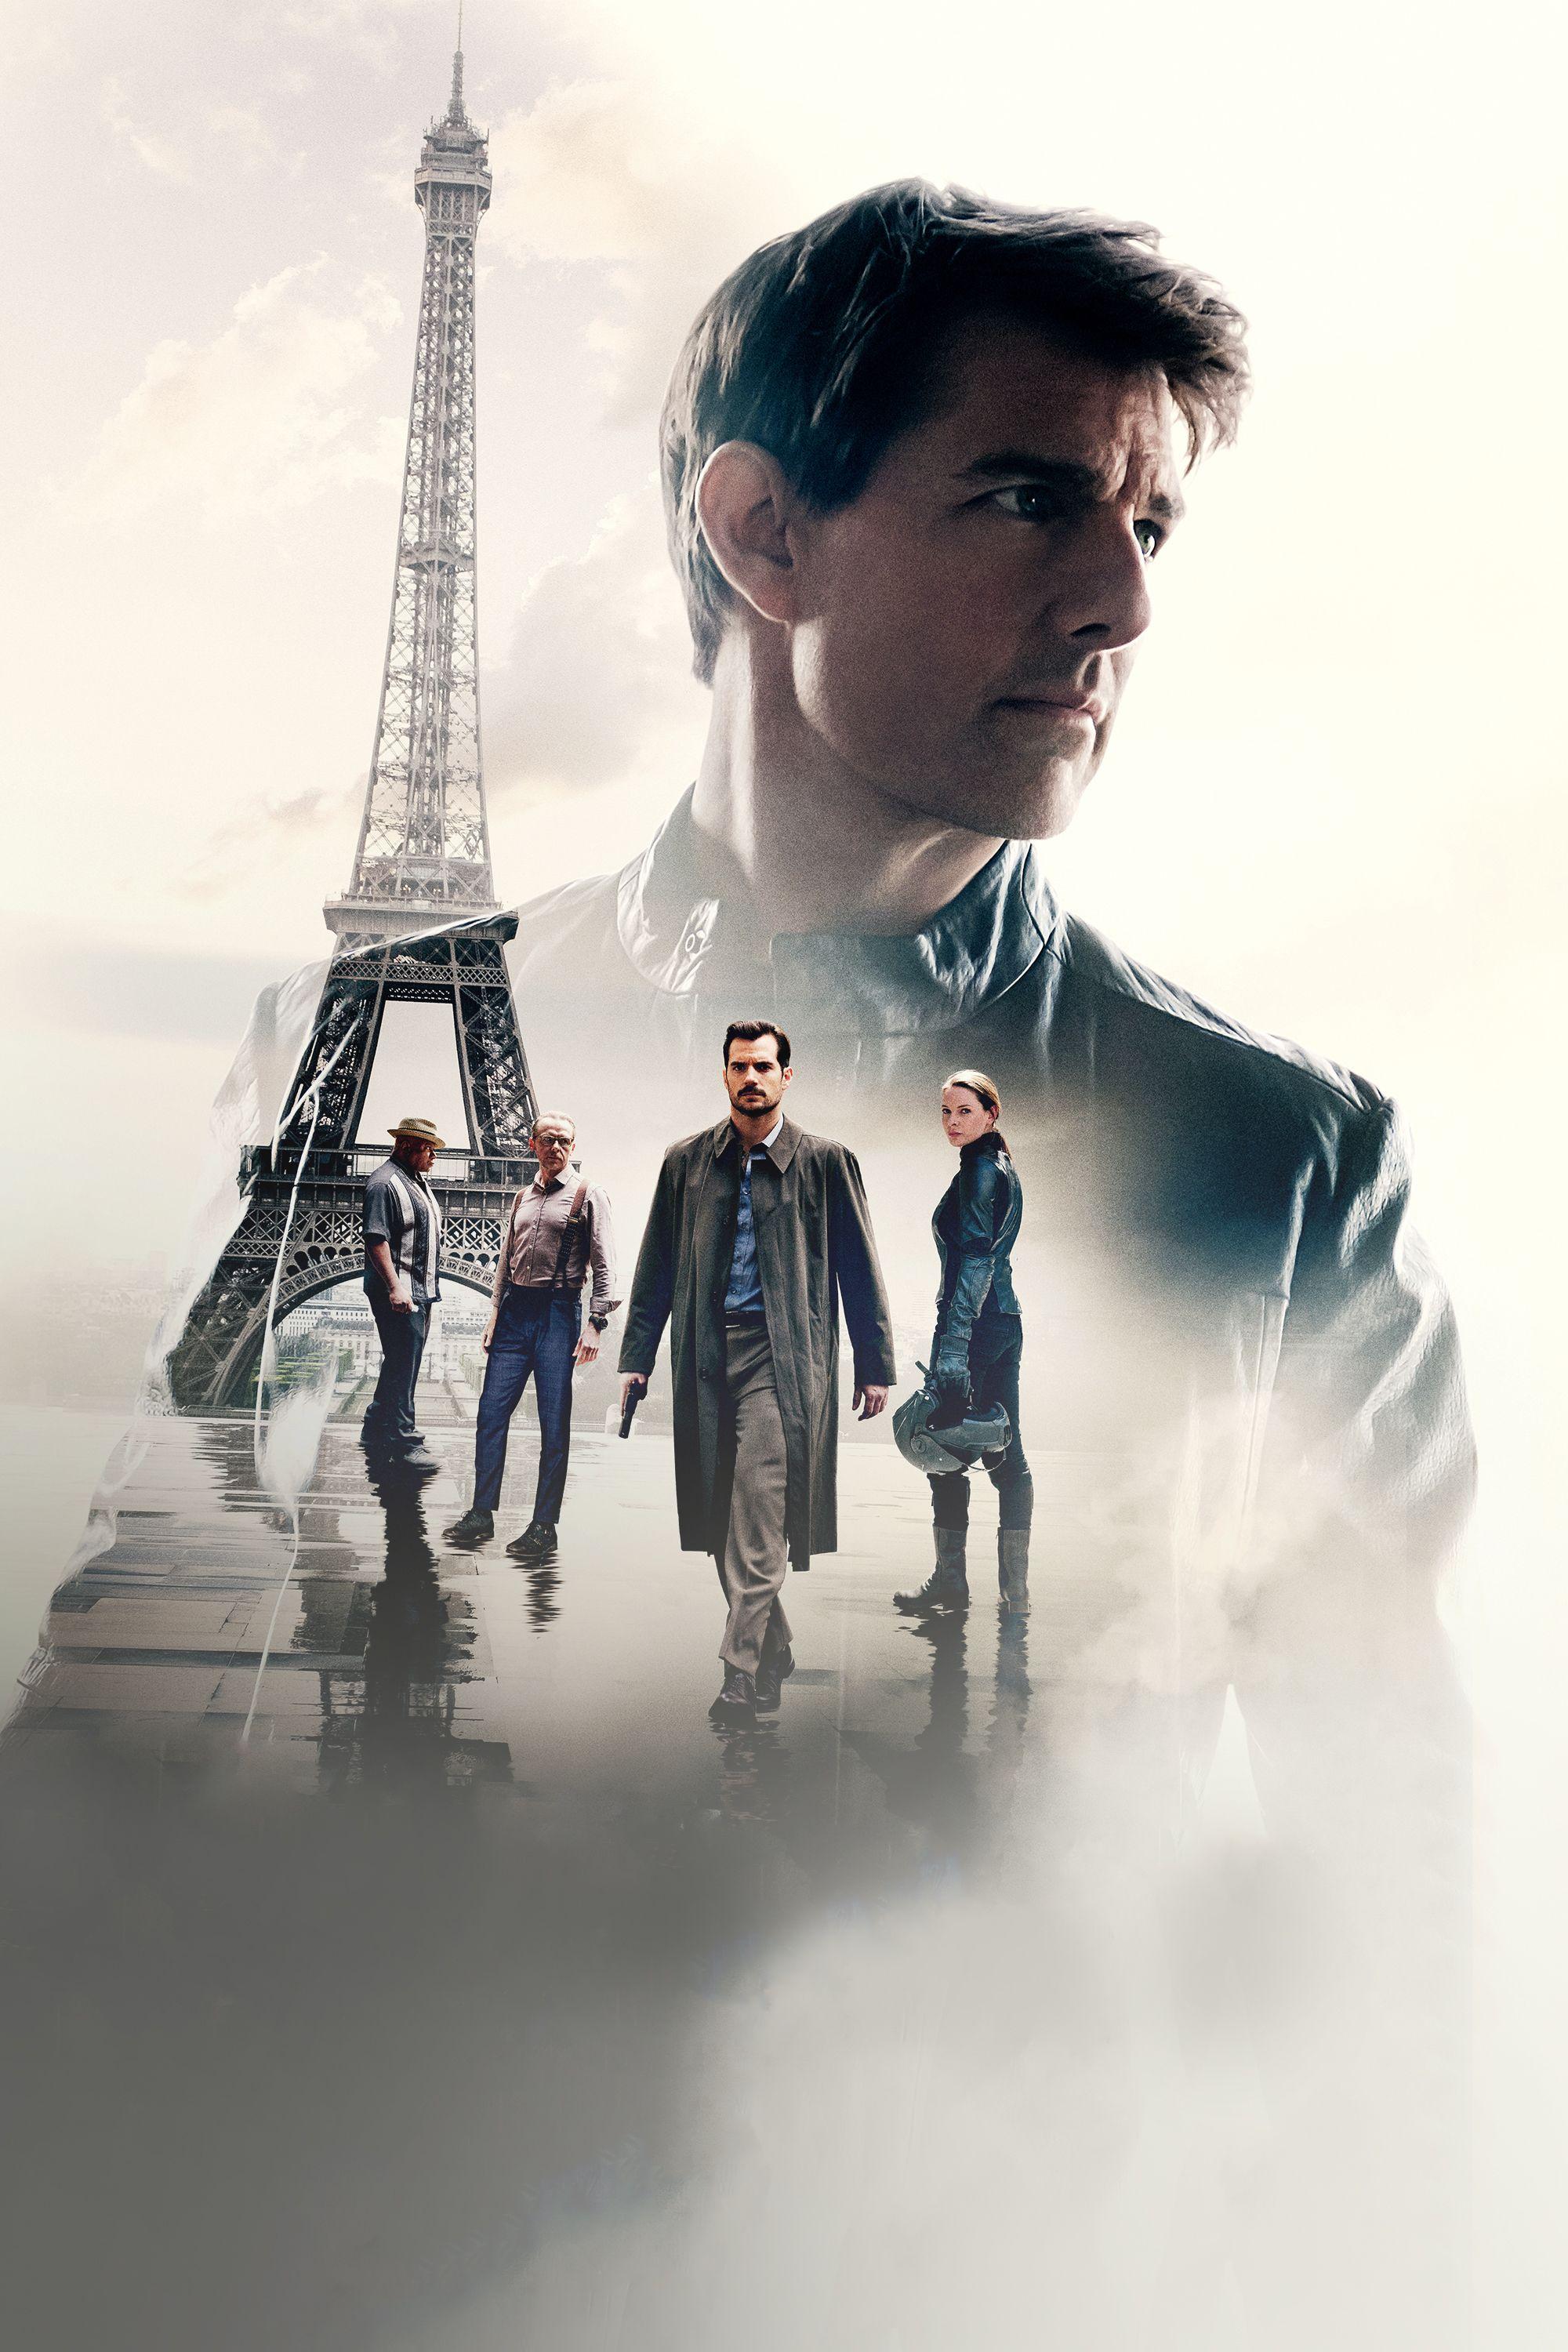 Mission Impossible 6 #MI6 #MI #MOVIES. Movies in 2019